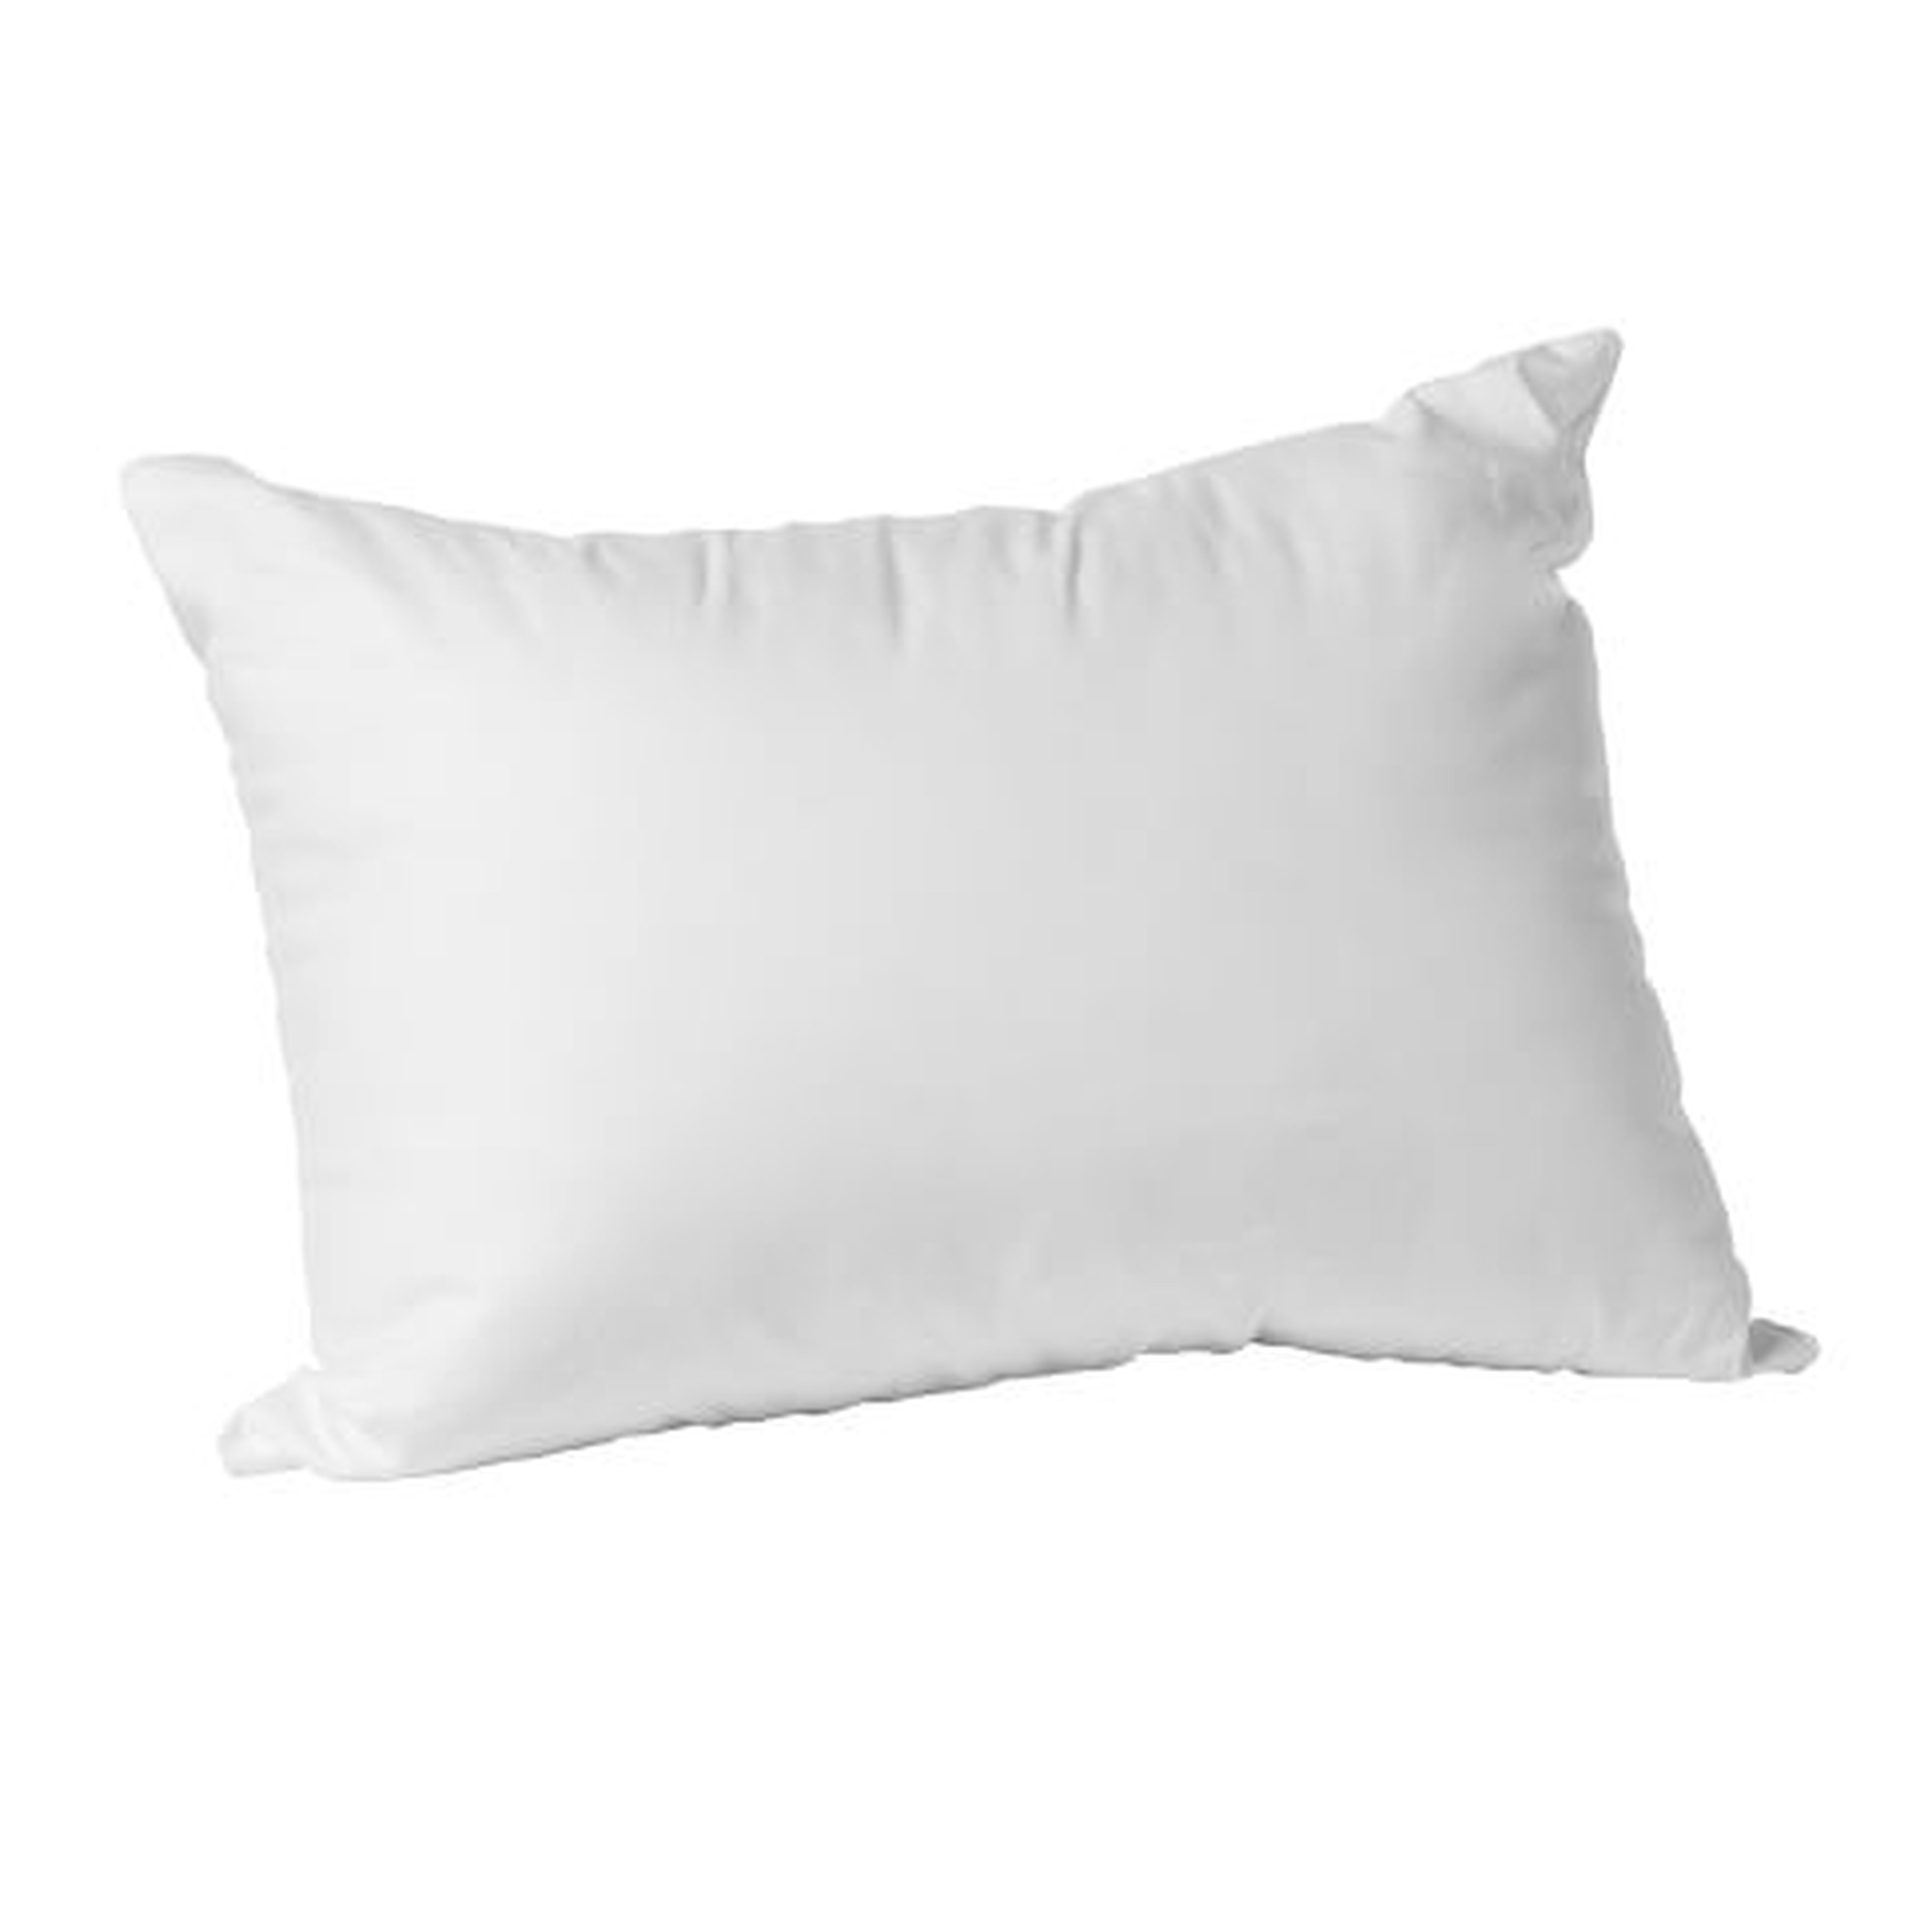 Decorative Pillow Insert - 12x16 - West Elm